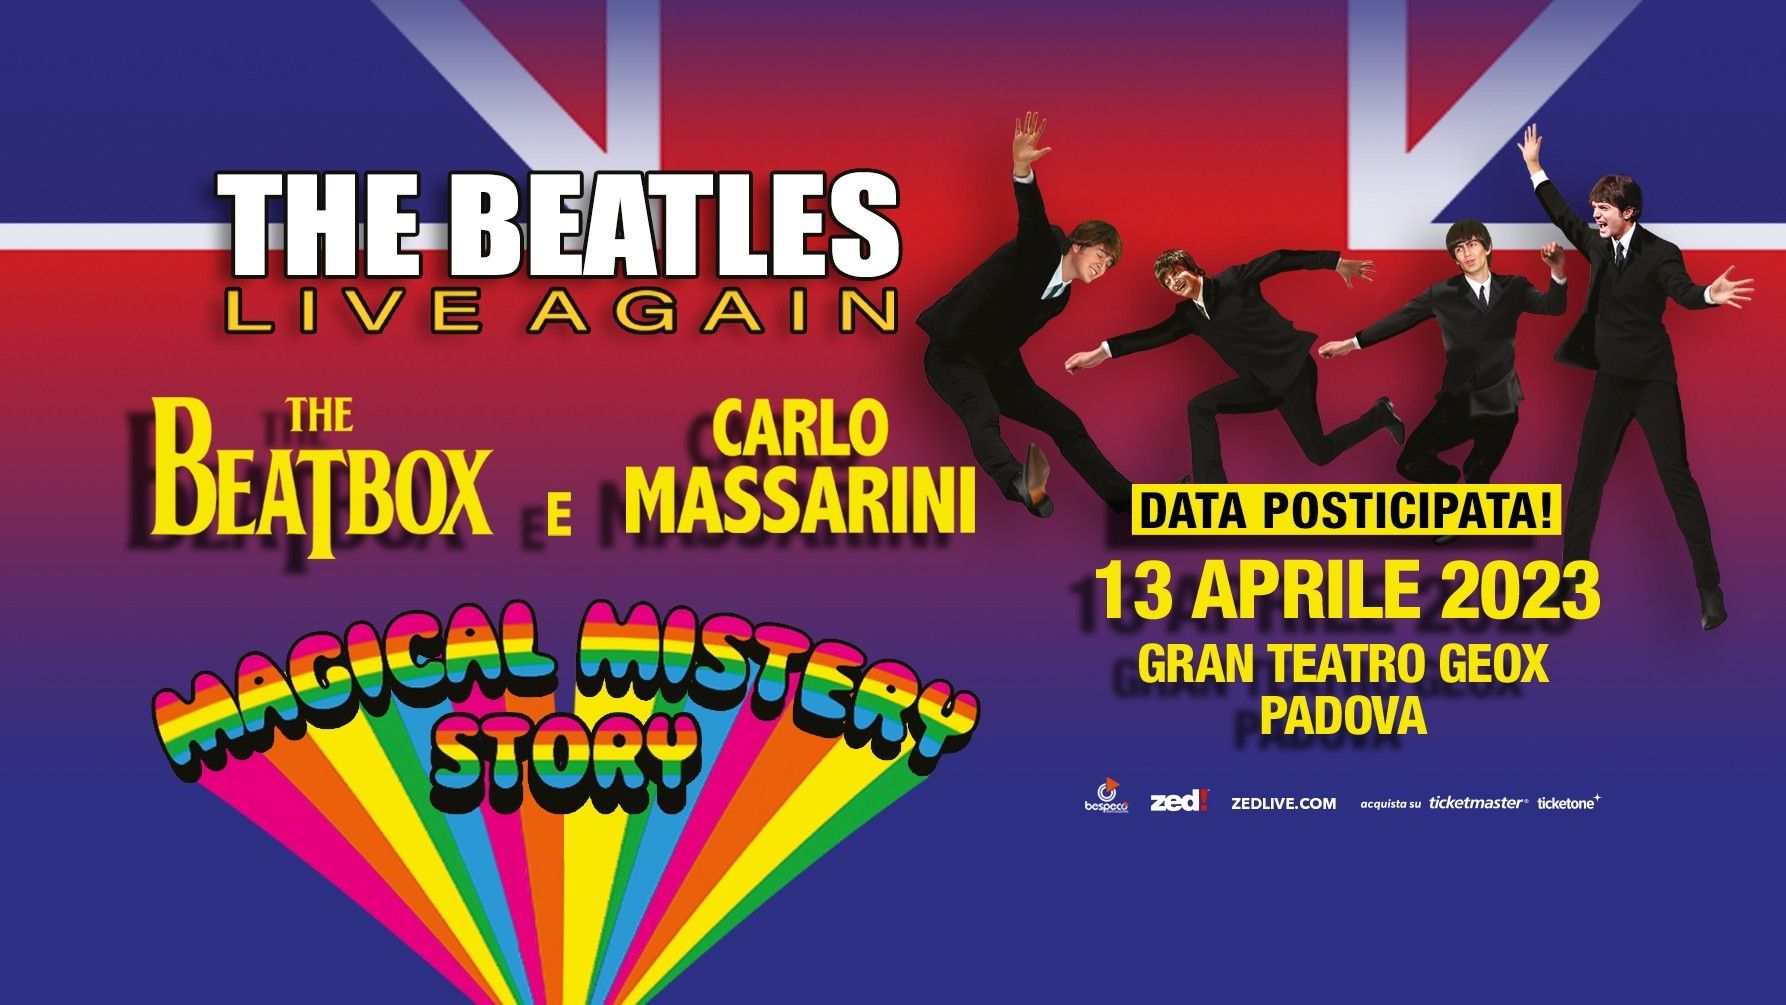 The Beatles Again, Carlo Massarini & The Beatbox